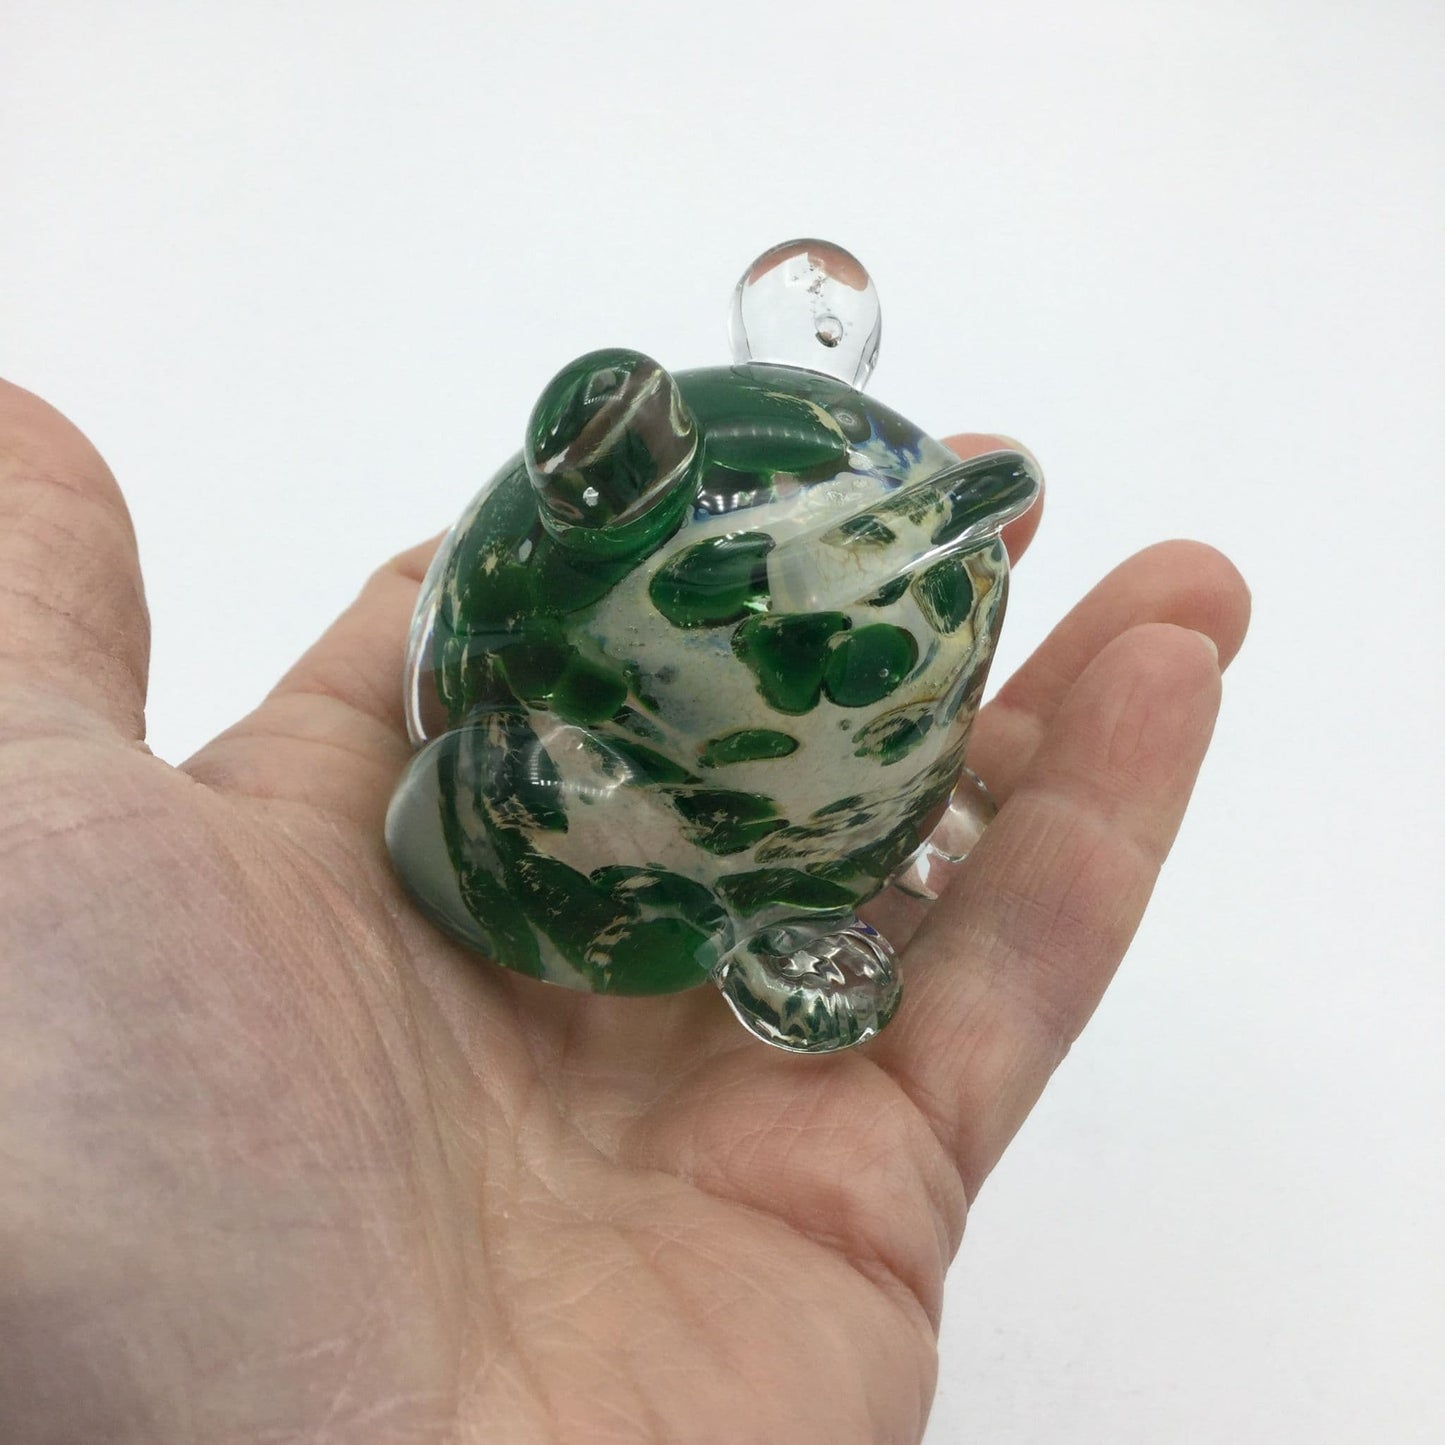 Valletta Glass Frog Ornament